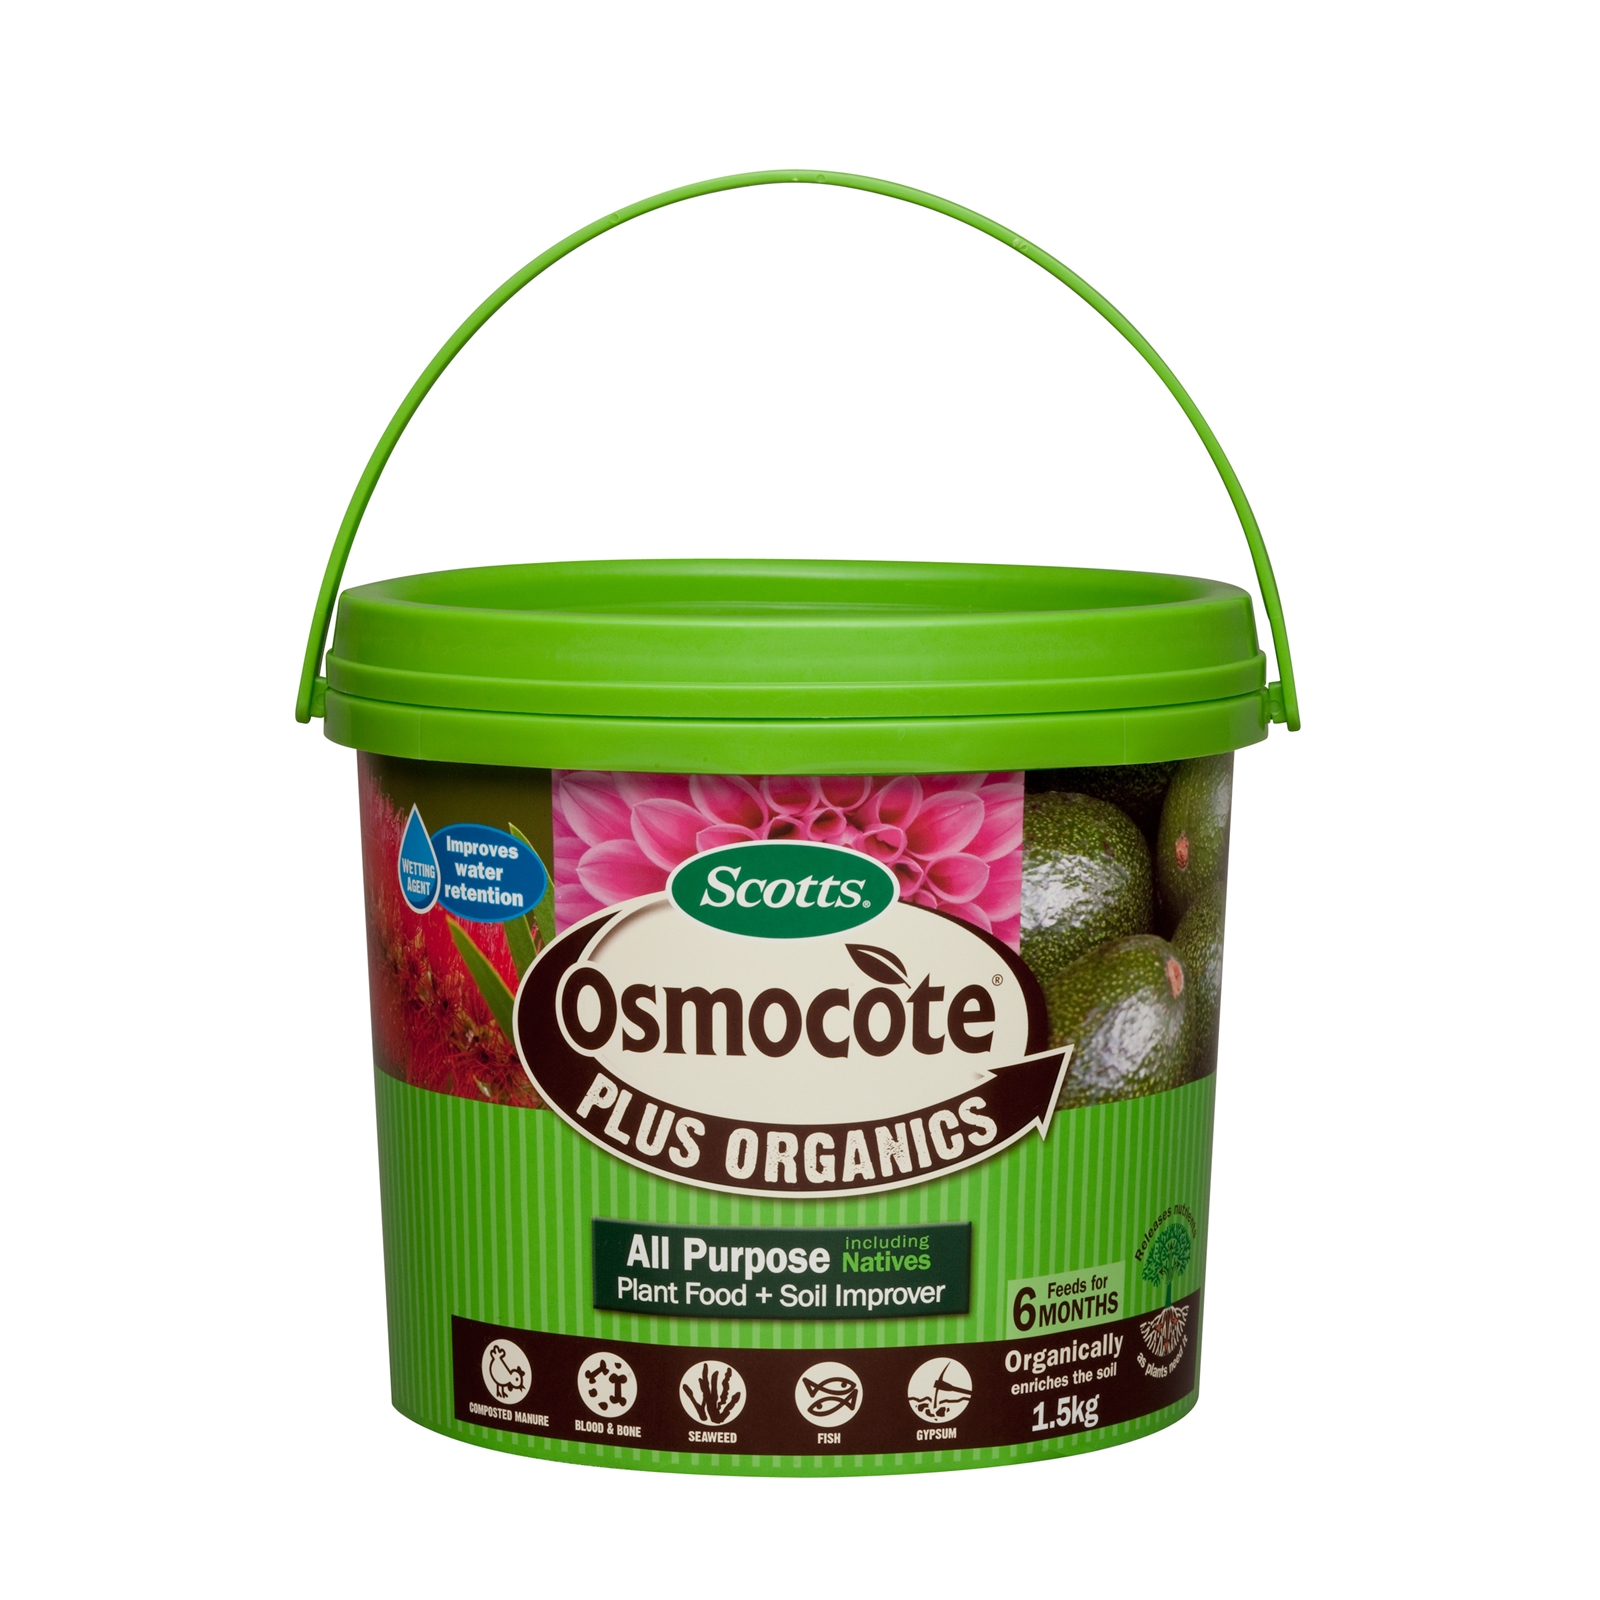 Osmocote Plus Organics 1.5kg All Purpose Plant Food and Soil Improver